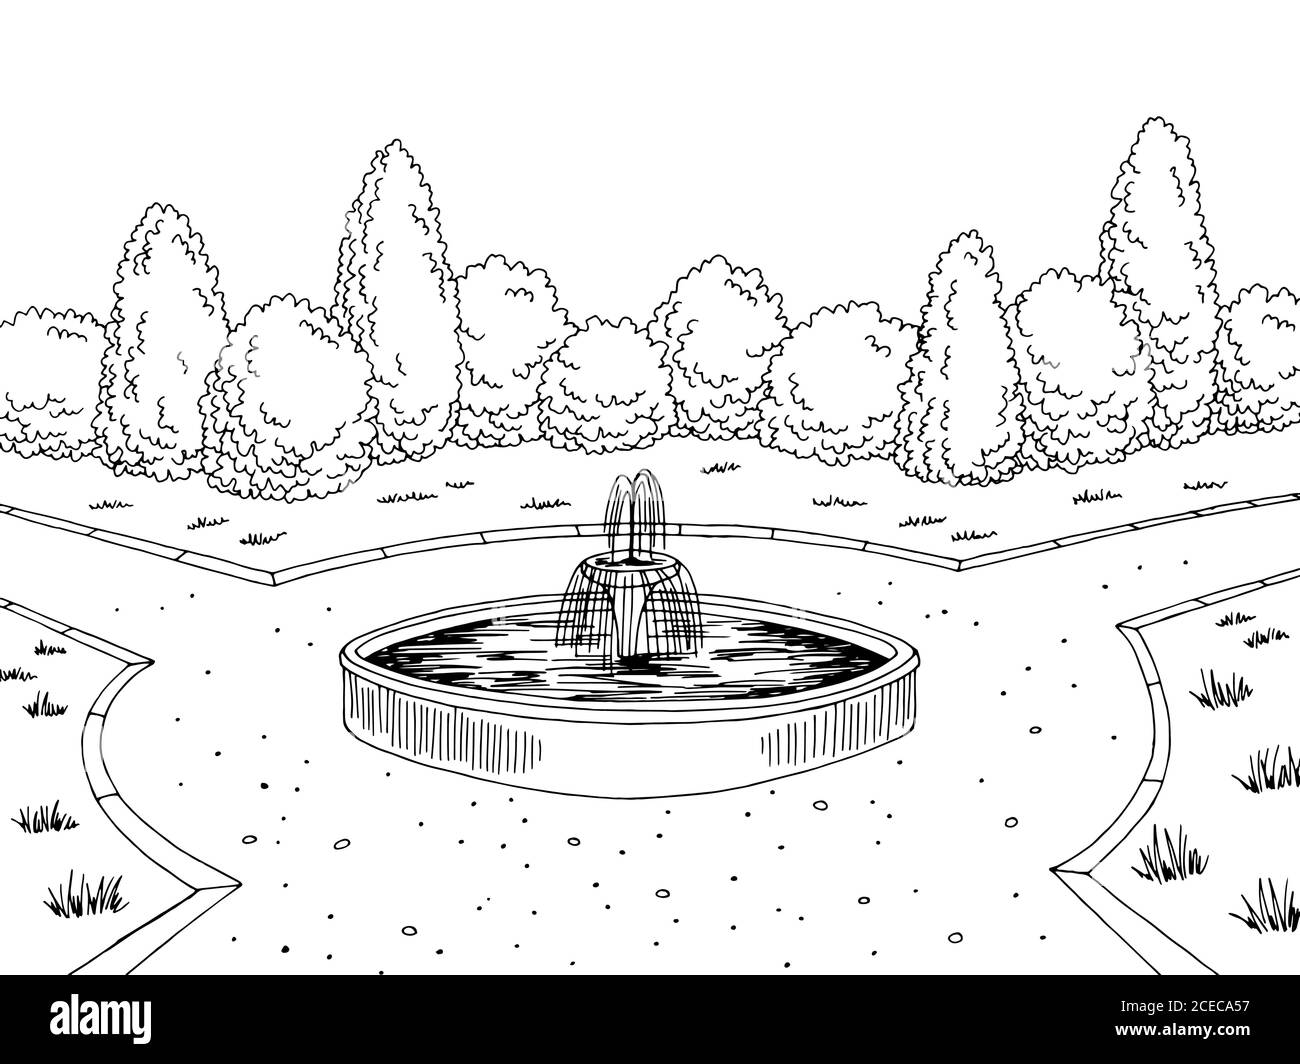 Park Brunnen Grafik schwarz weiß Stadt Landschaft Skizze Illustration Vektor Stock Vektor